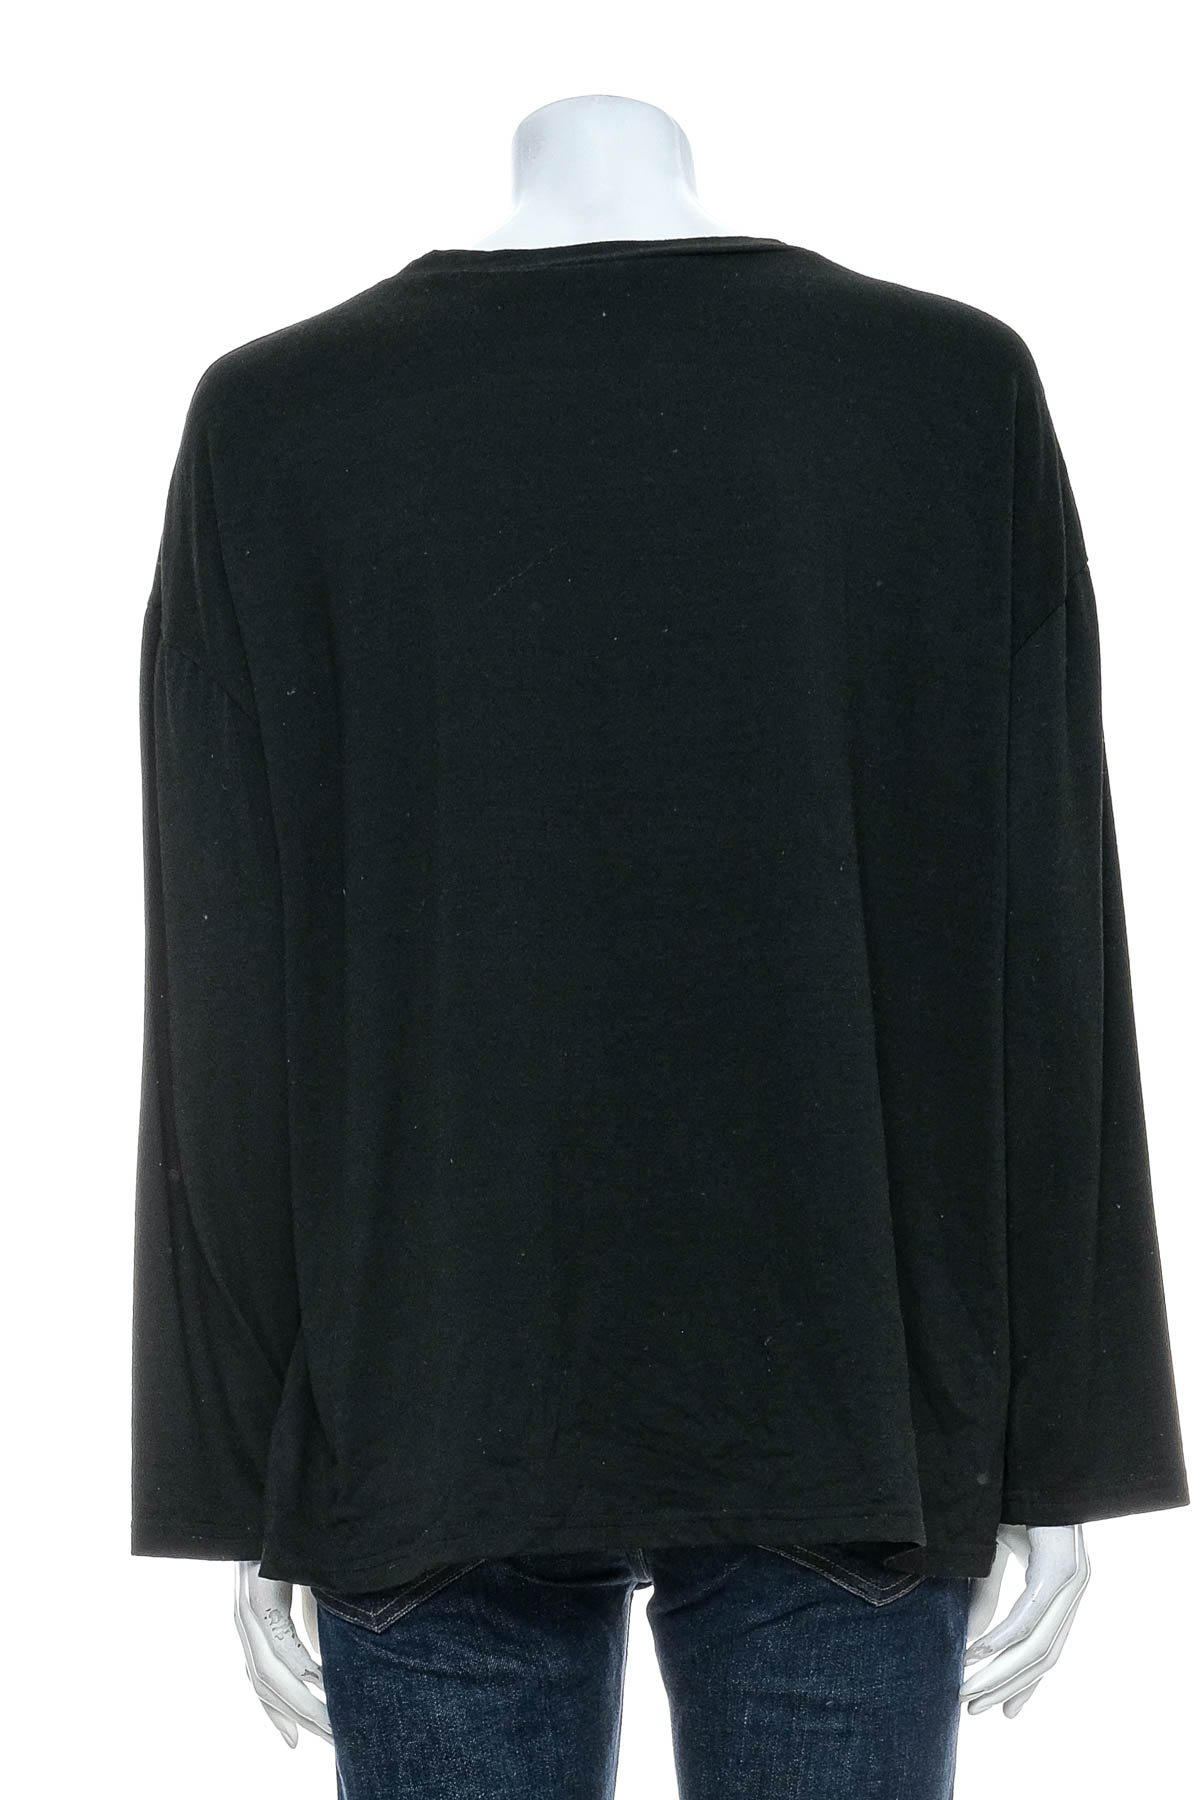 Women's blouse - SHEIN - 1